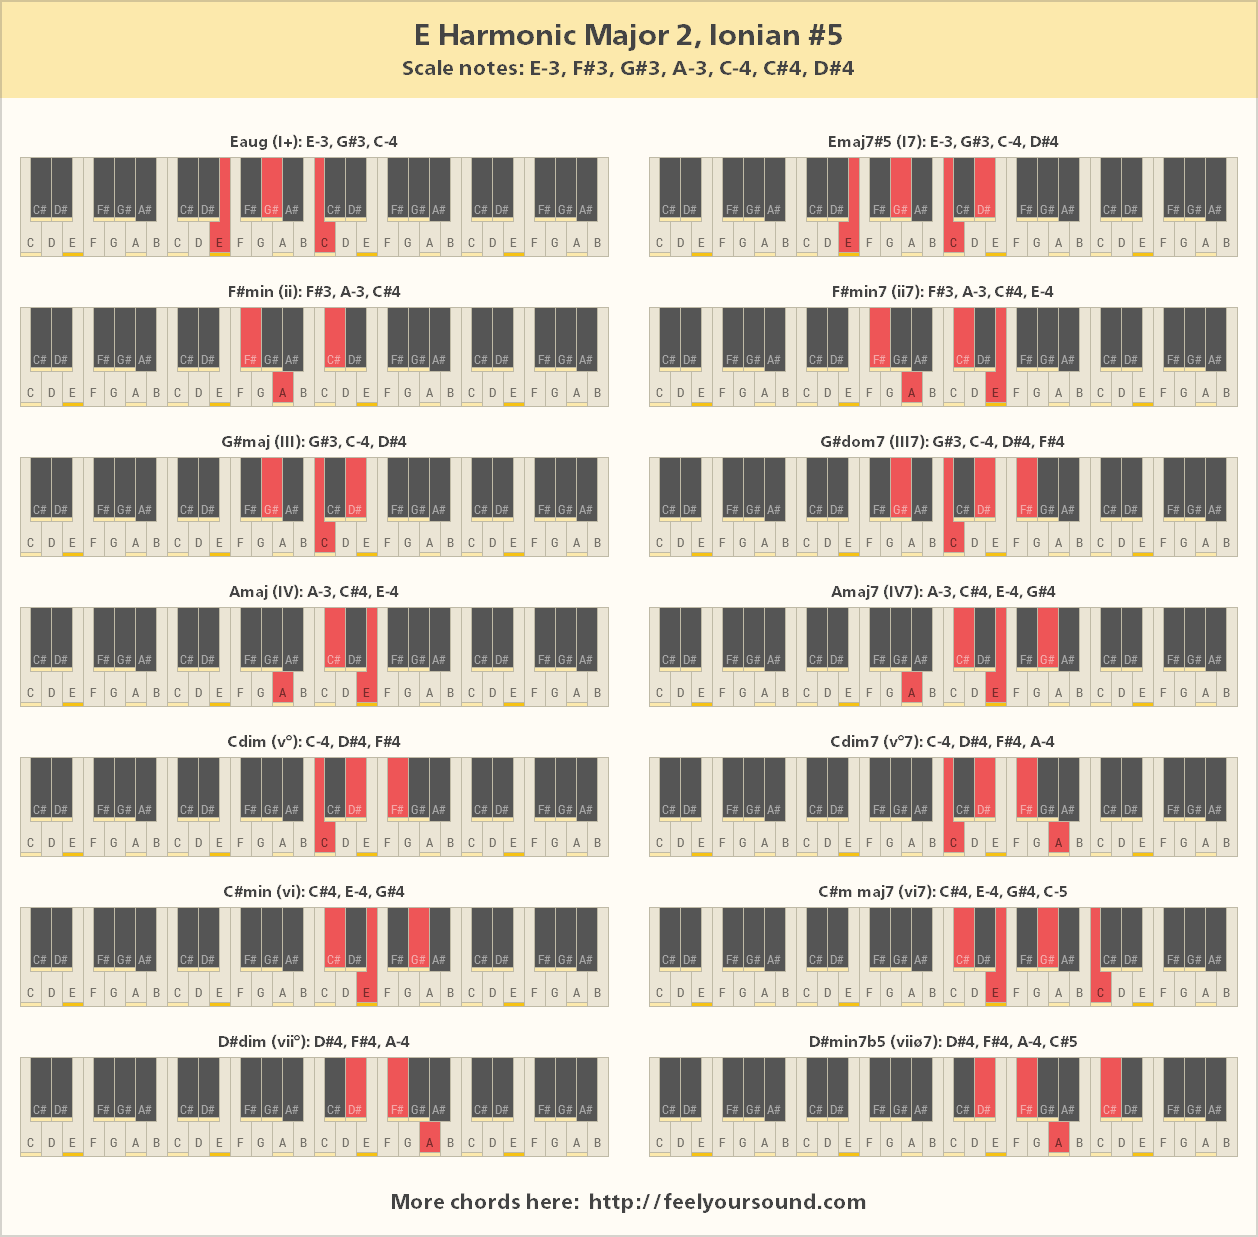 All important chords of E Harmonic Major 2, Ionian #5